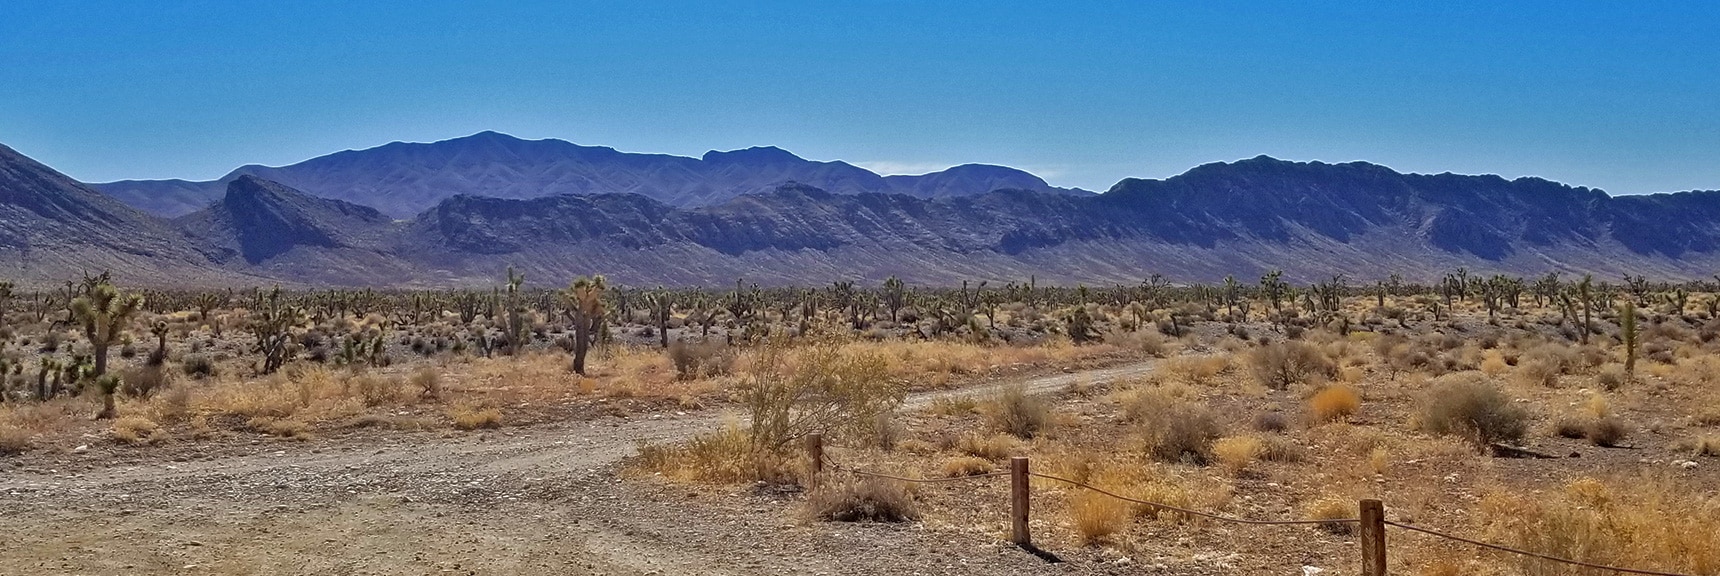 View Toward Northern Sheep Range at Pine Nut Road Intersection | Lower Mormon Well Road | Sheep Range, Desert National Wildlife Refuge, Nevada